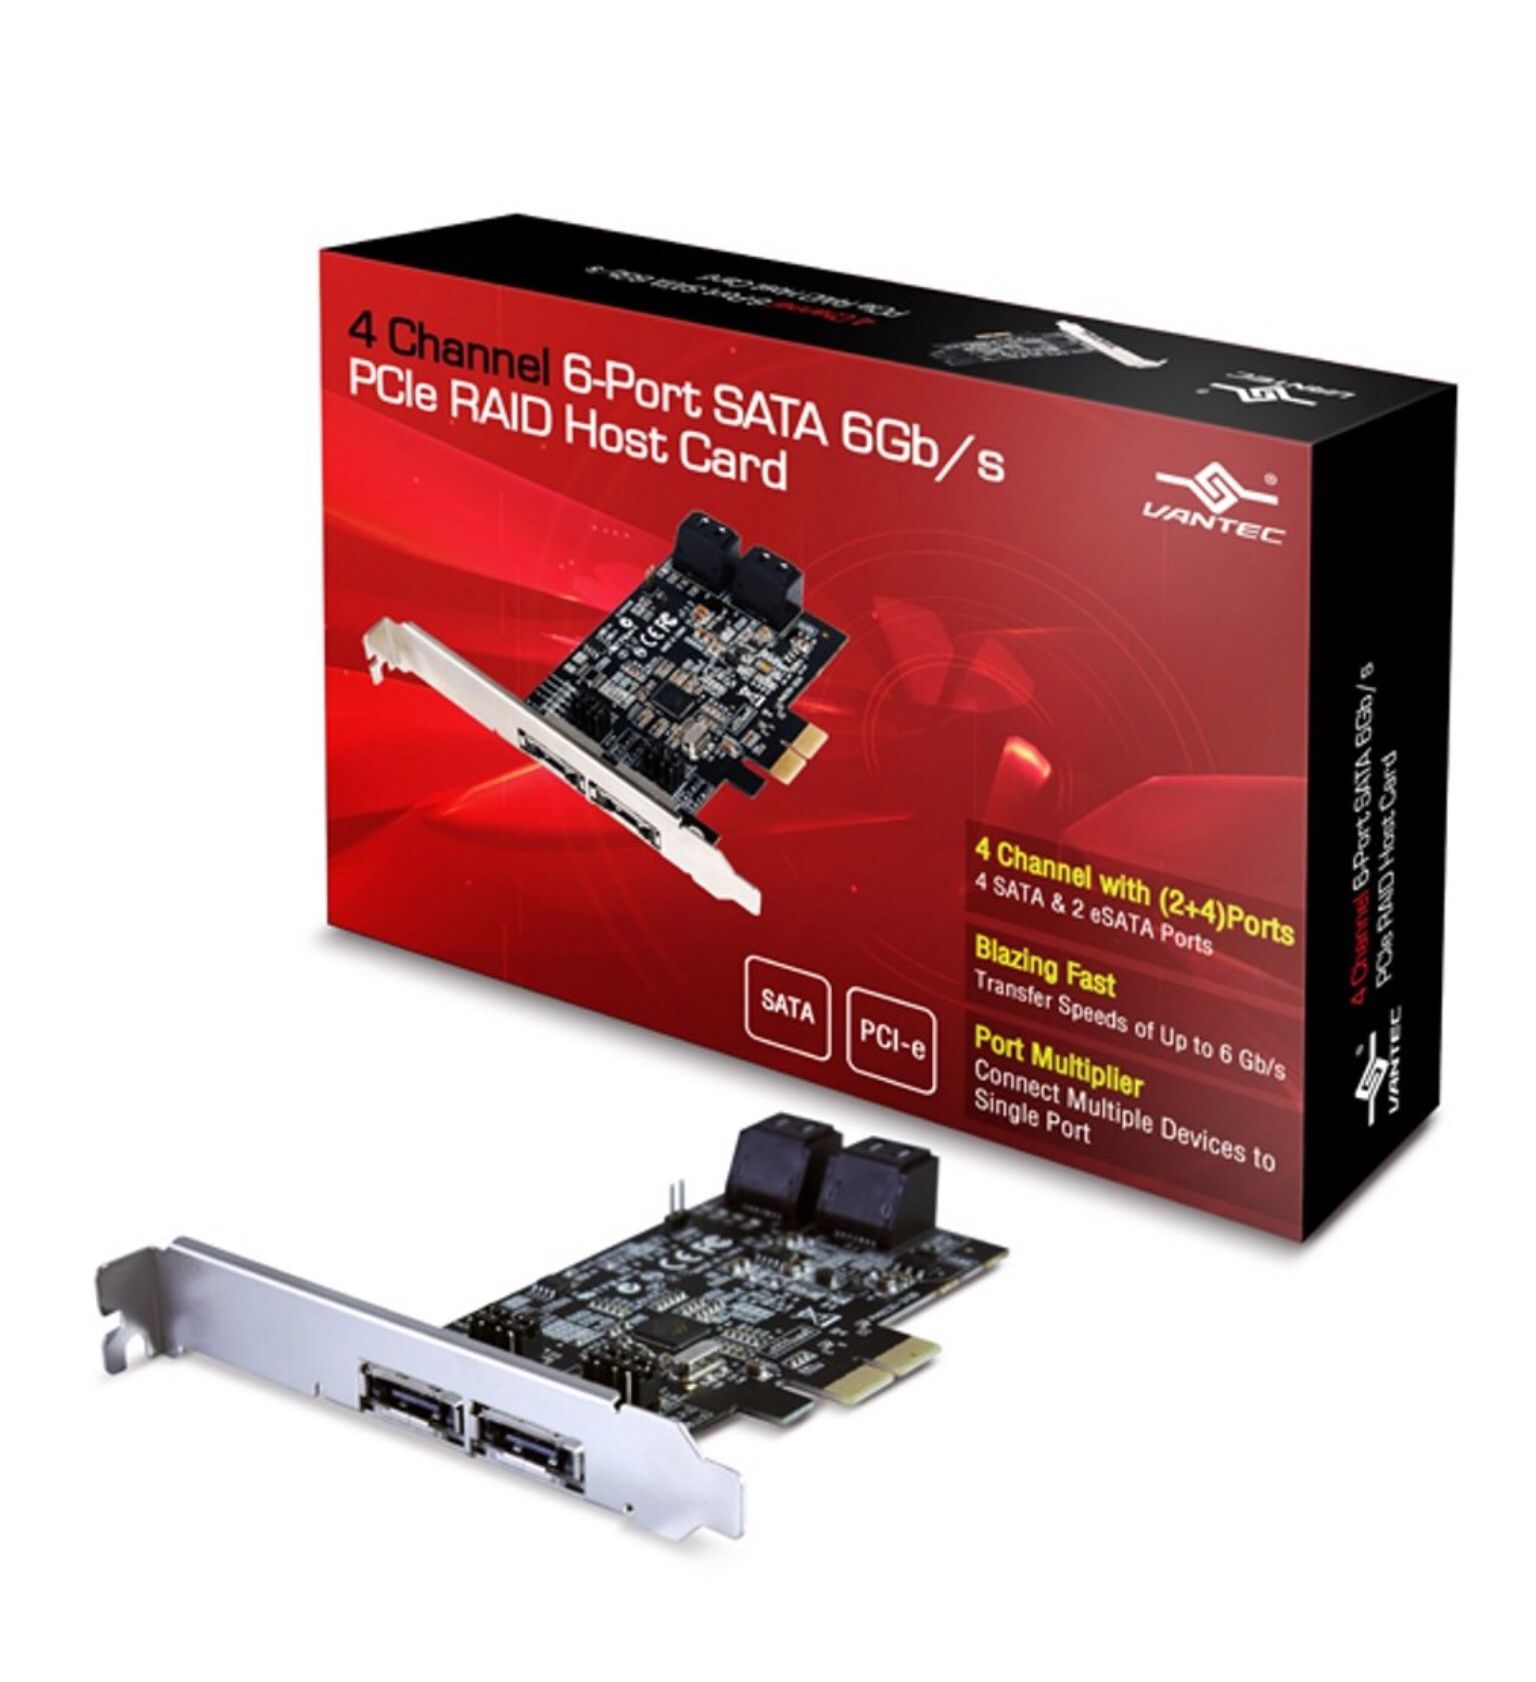 Vantec 4 Channel 6-Port SATA 6Gb/s PCIe RAID Host Card.